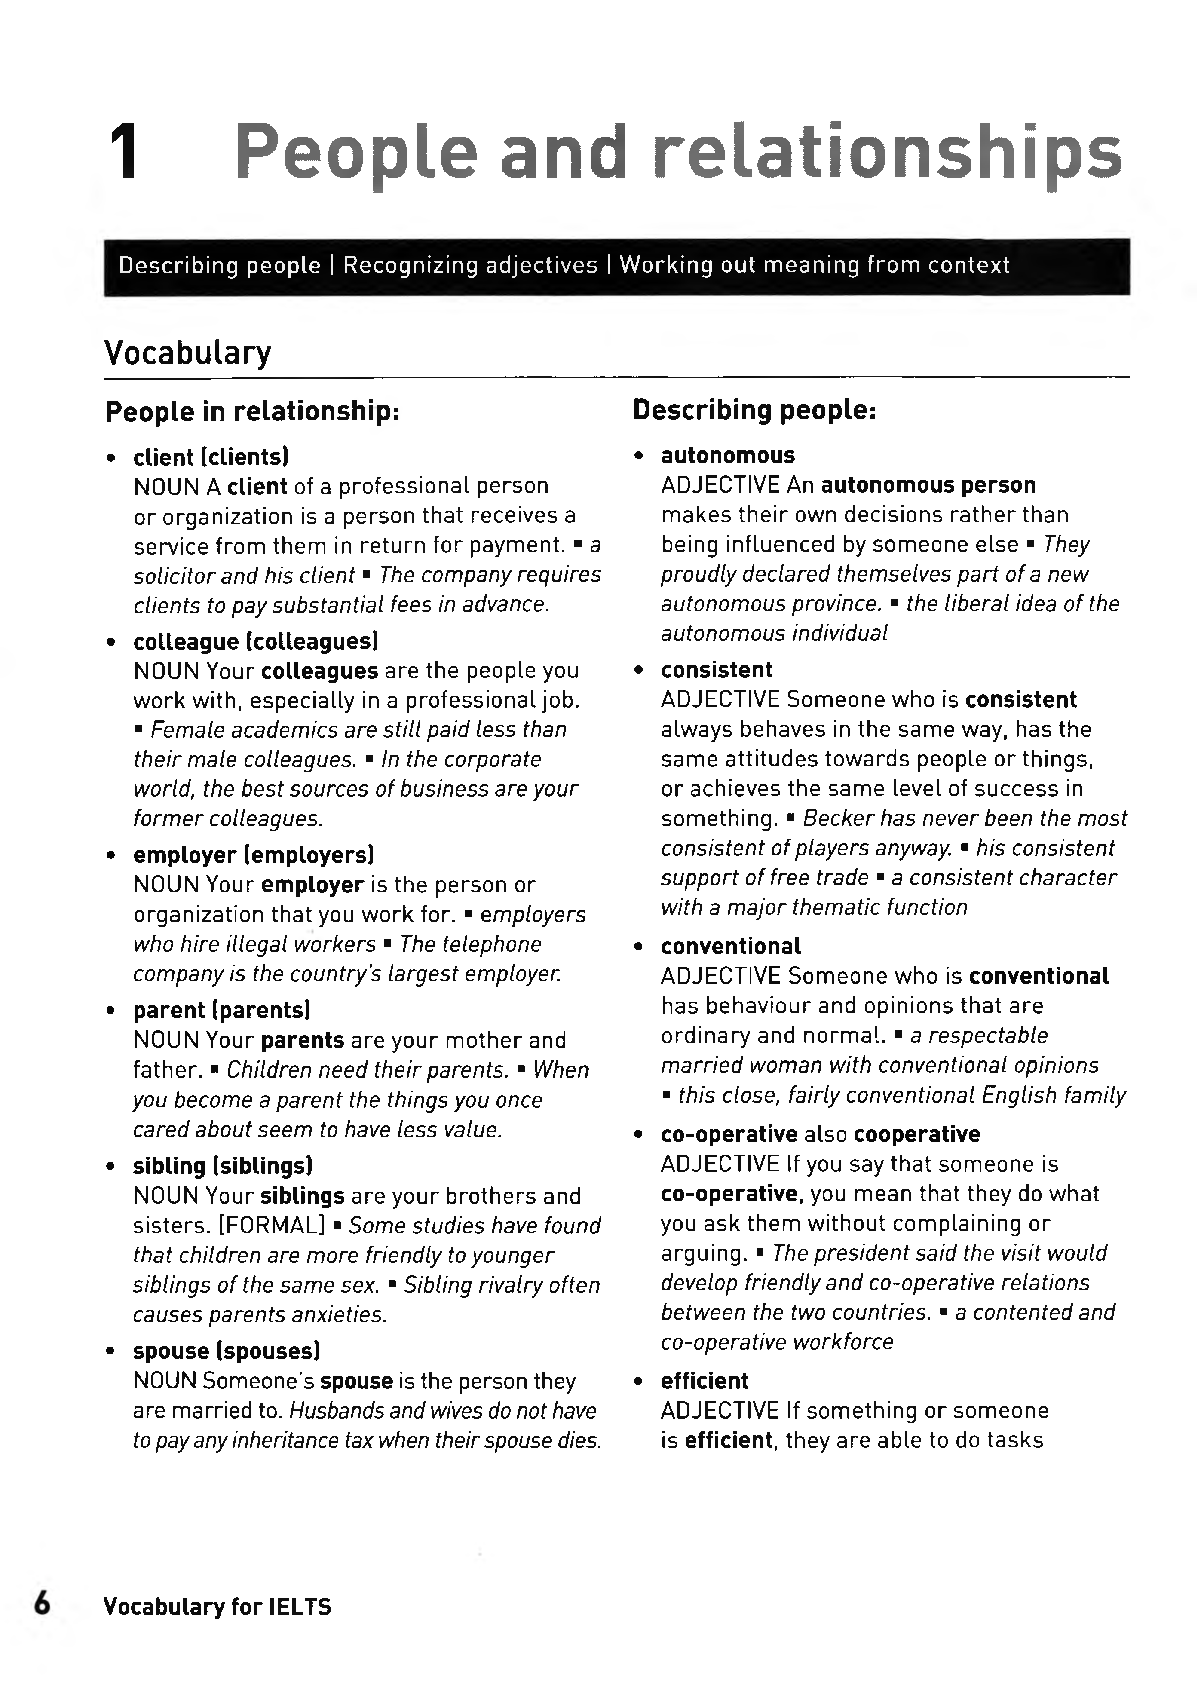 Sách Collins Vocabulary for IELTS pdf | Xem online, tải PDF miễn phí (trang 7)